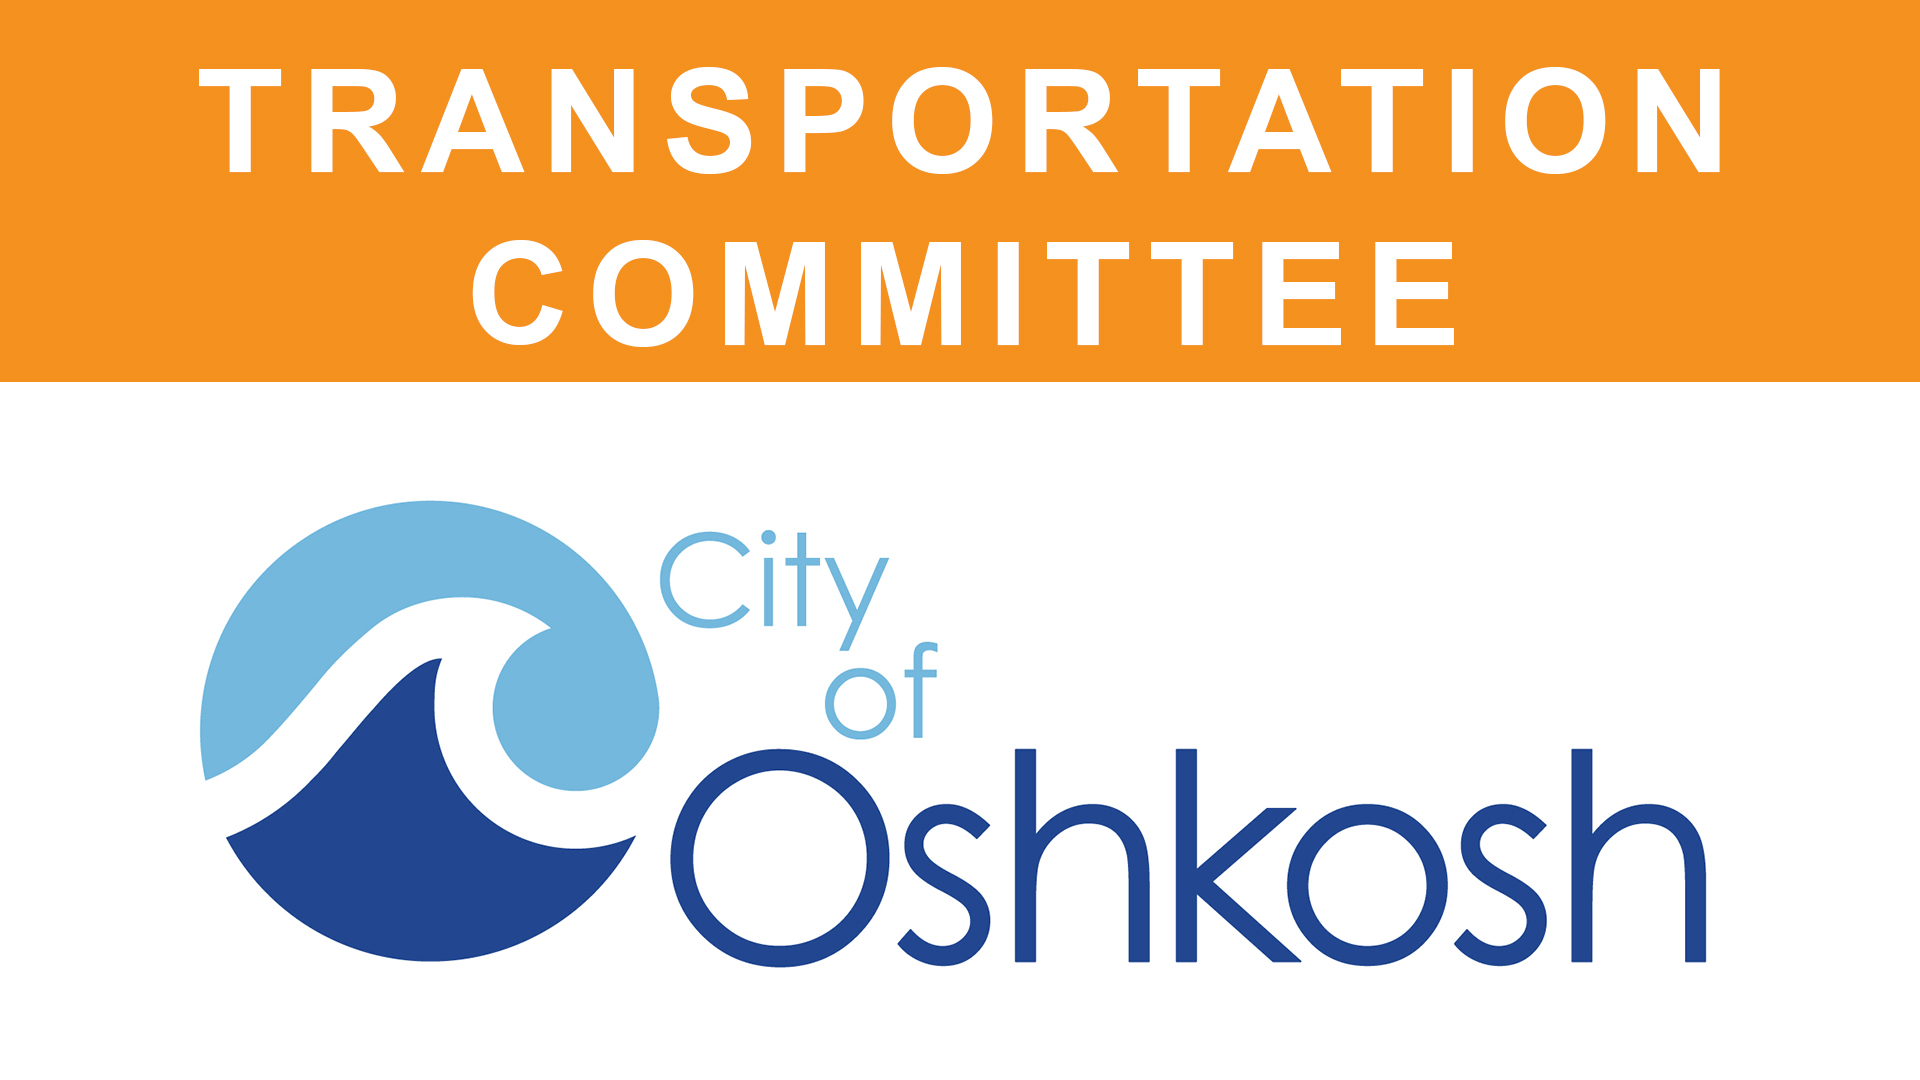 Oshkosh Transportation Committee 4/9/24